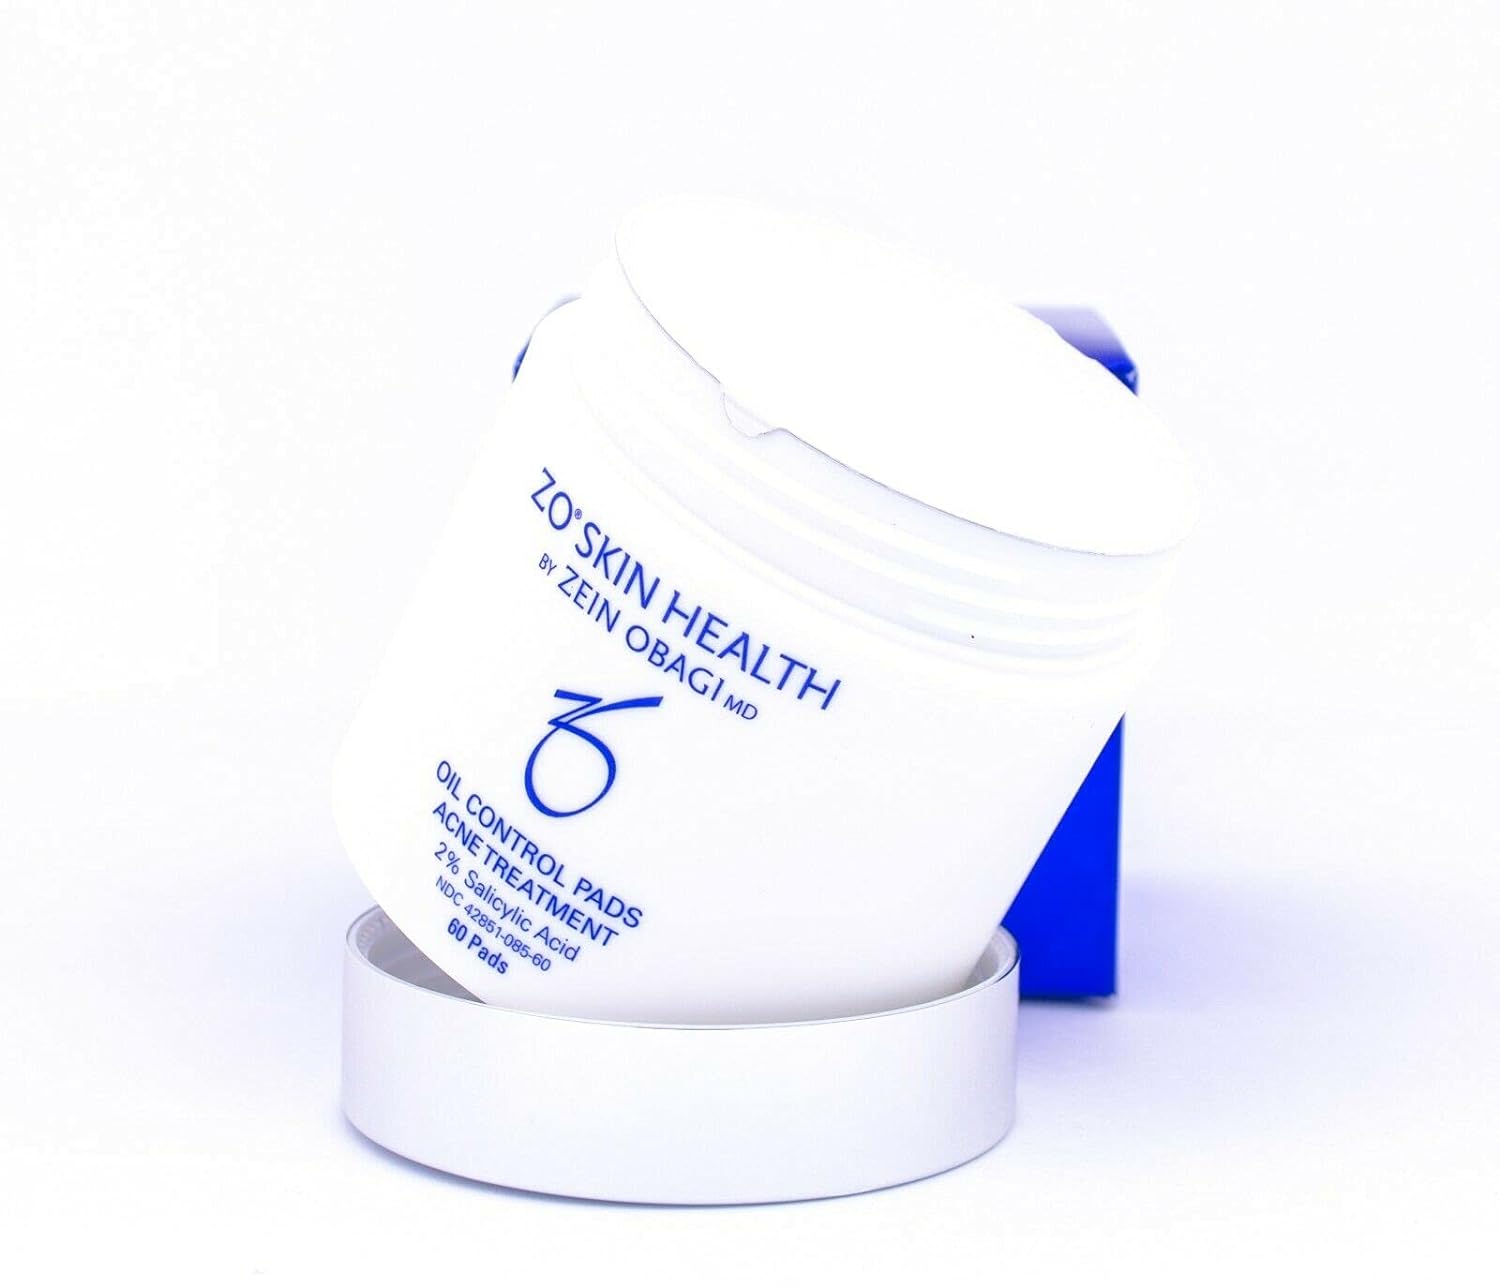 ZO Skin Health Oil Control Pads Acne Treatment, 2% Salicylic Acid- 60 pads formerly calledZO MEDICAL Cebatrol